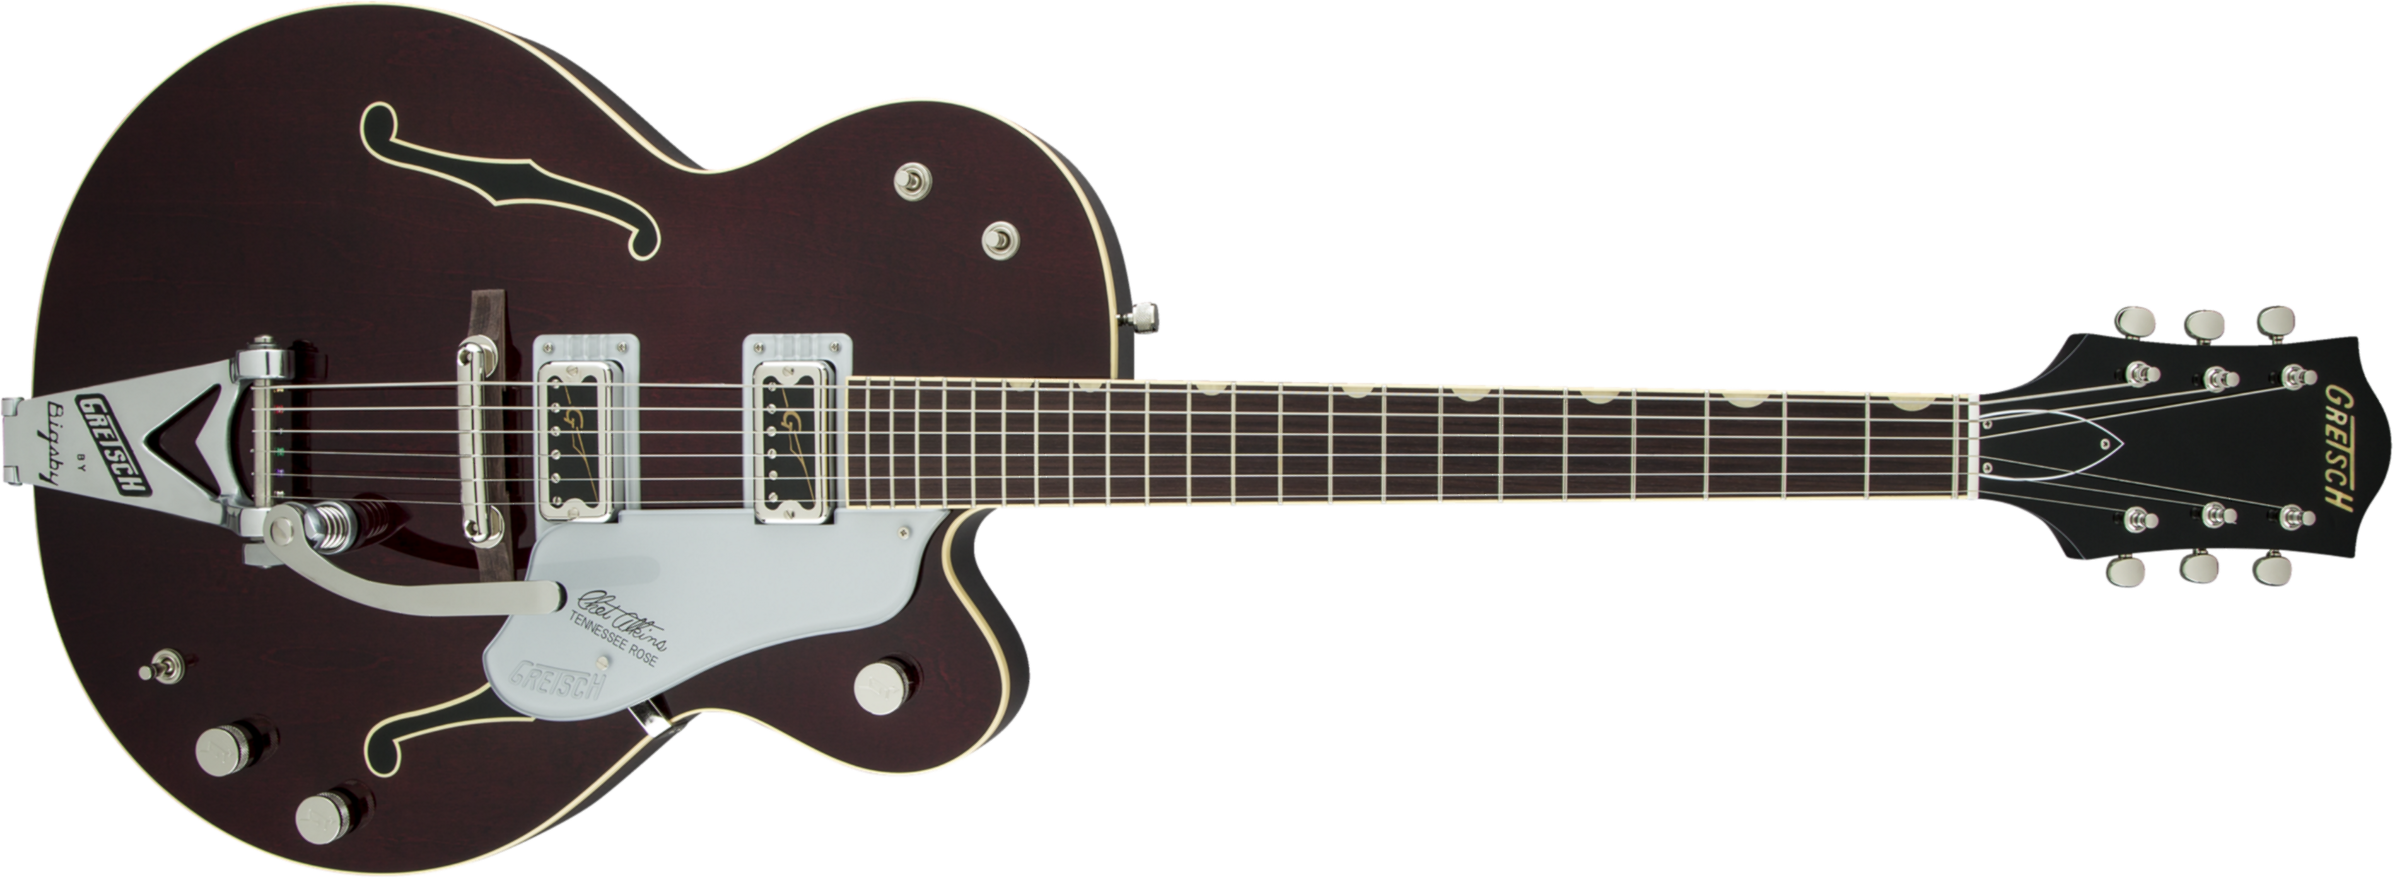 Gretsch G6119t-62vs Chet Atkins Tennessee Rose 2h Trem Rw - Dark Cherry Stain - Semi hollow elektriche gitaar - Main picture